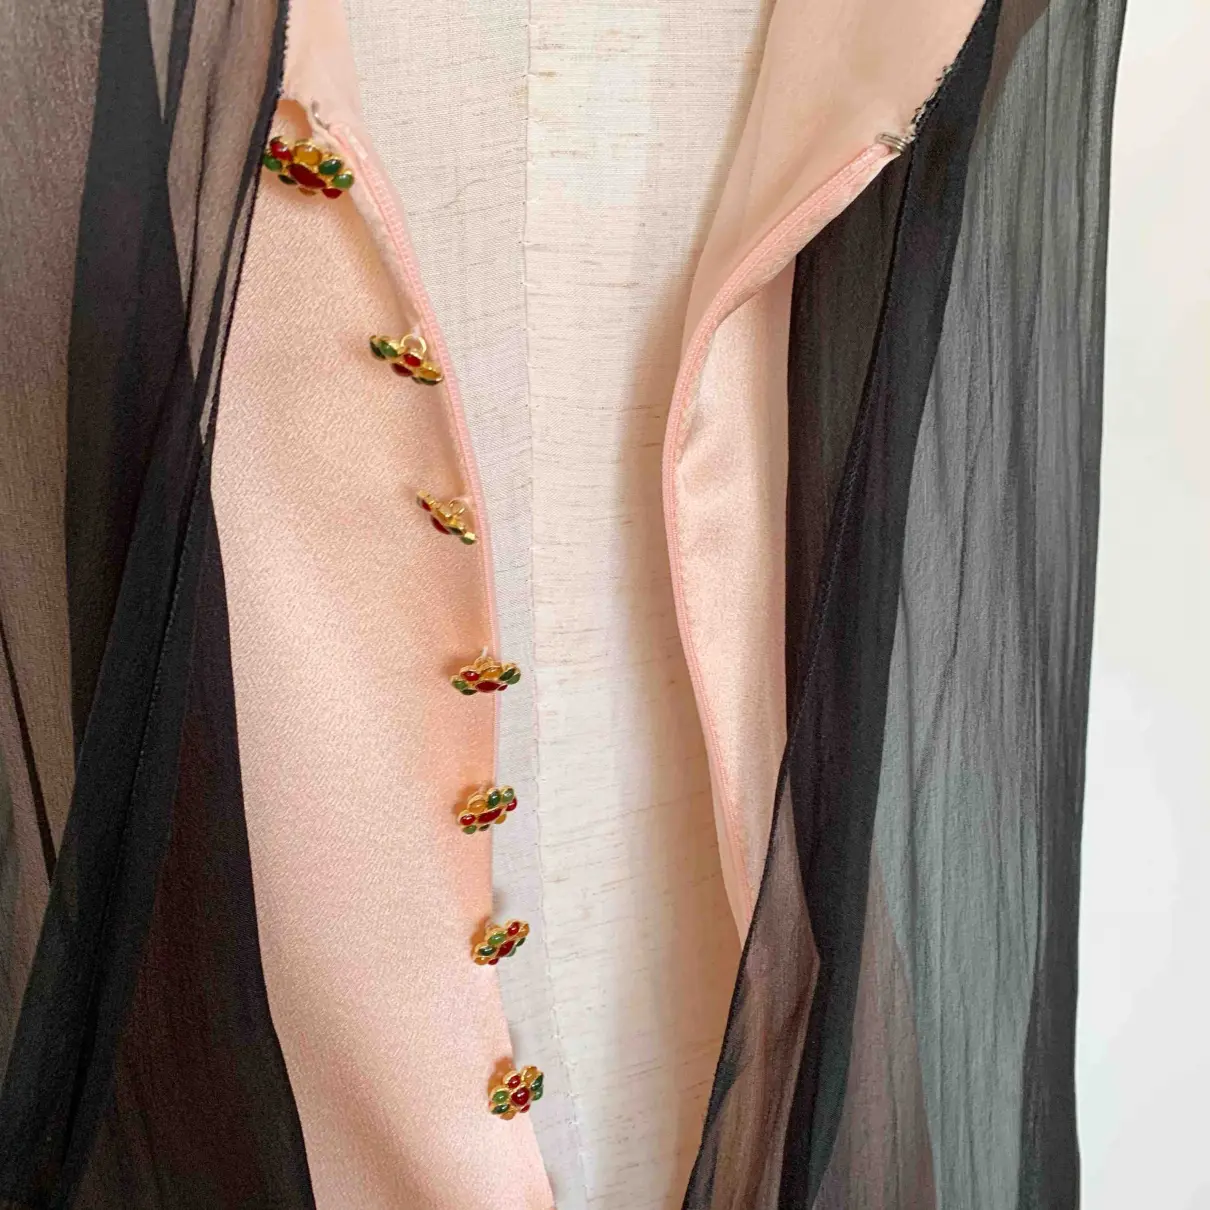 Silk maxi dress Chanel - Vintage